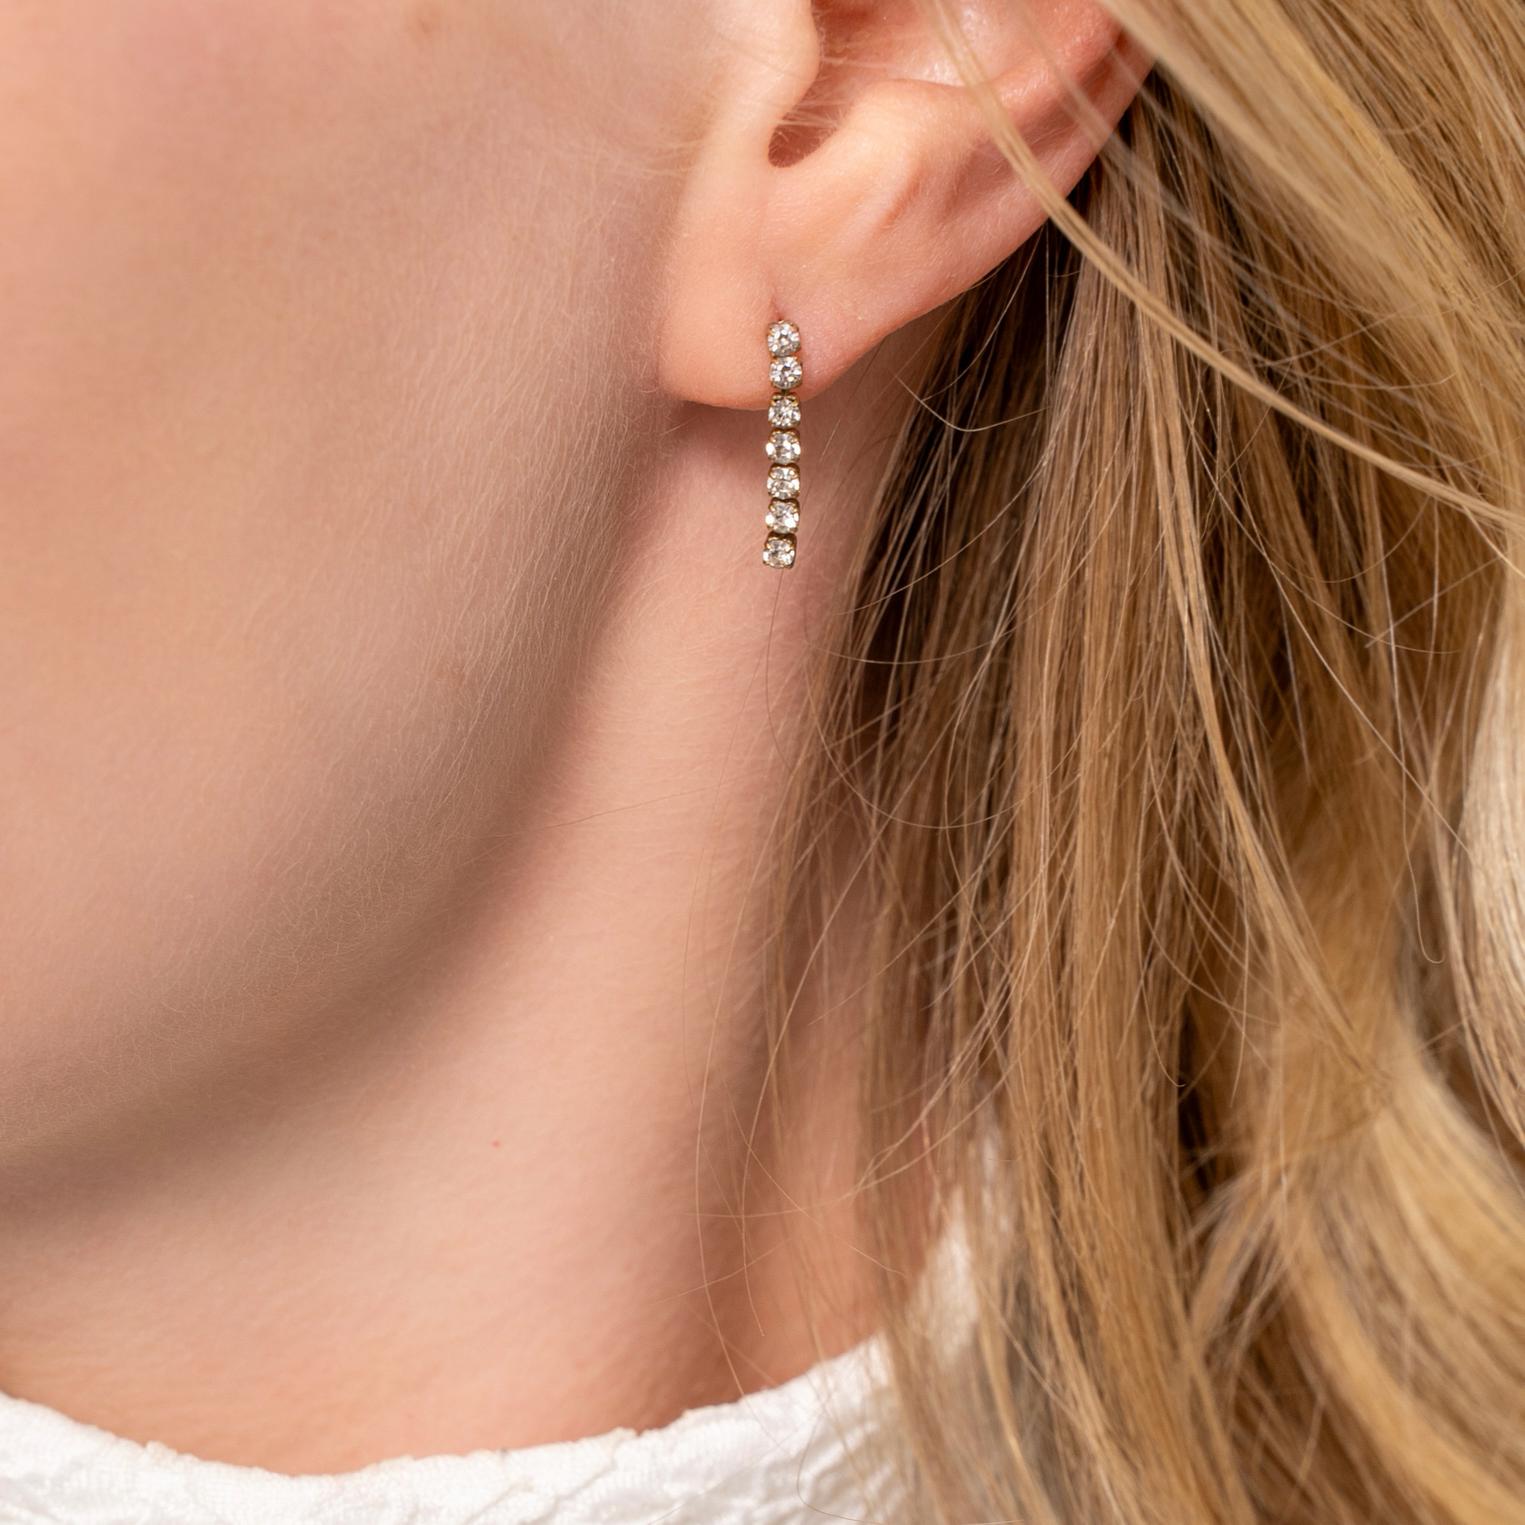 Stud earrings stones